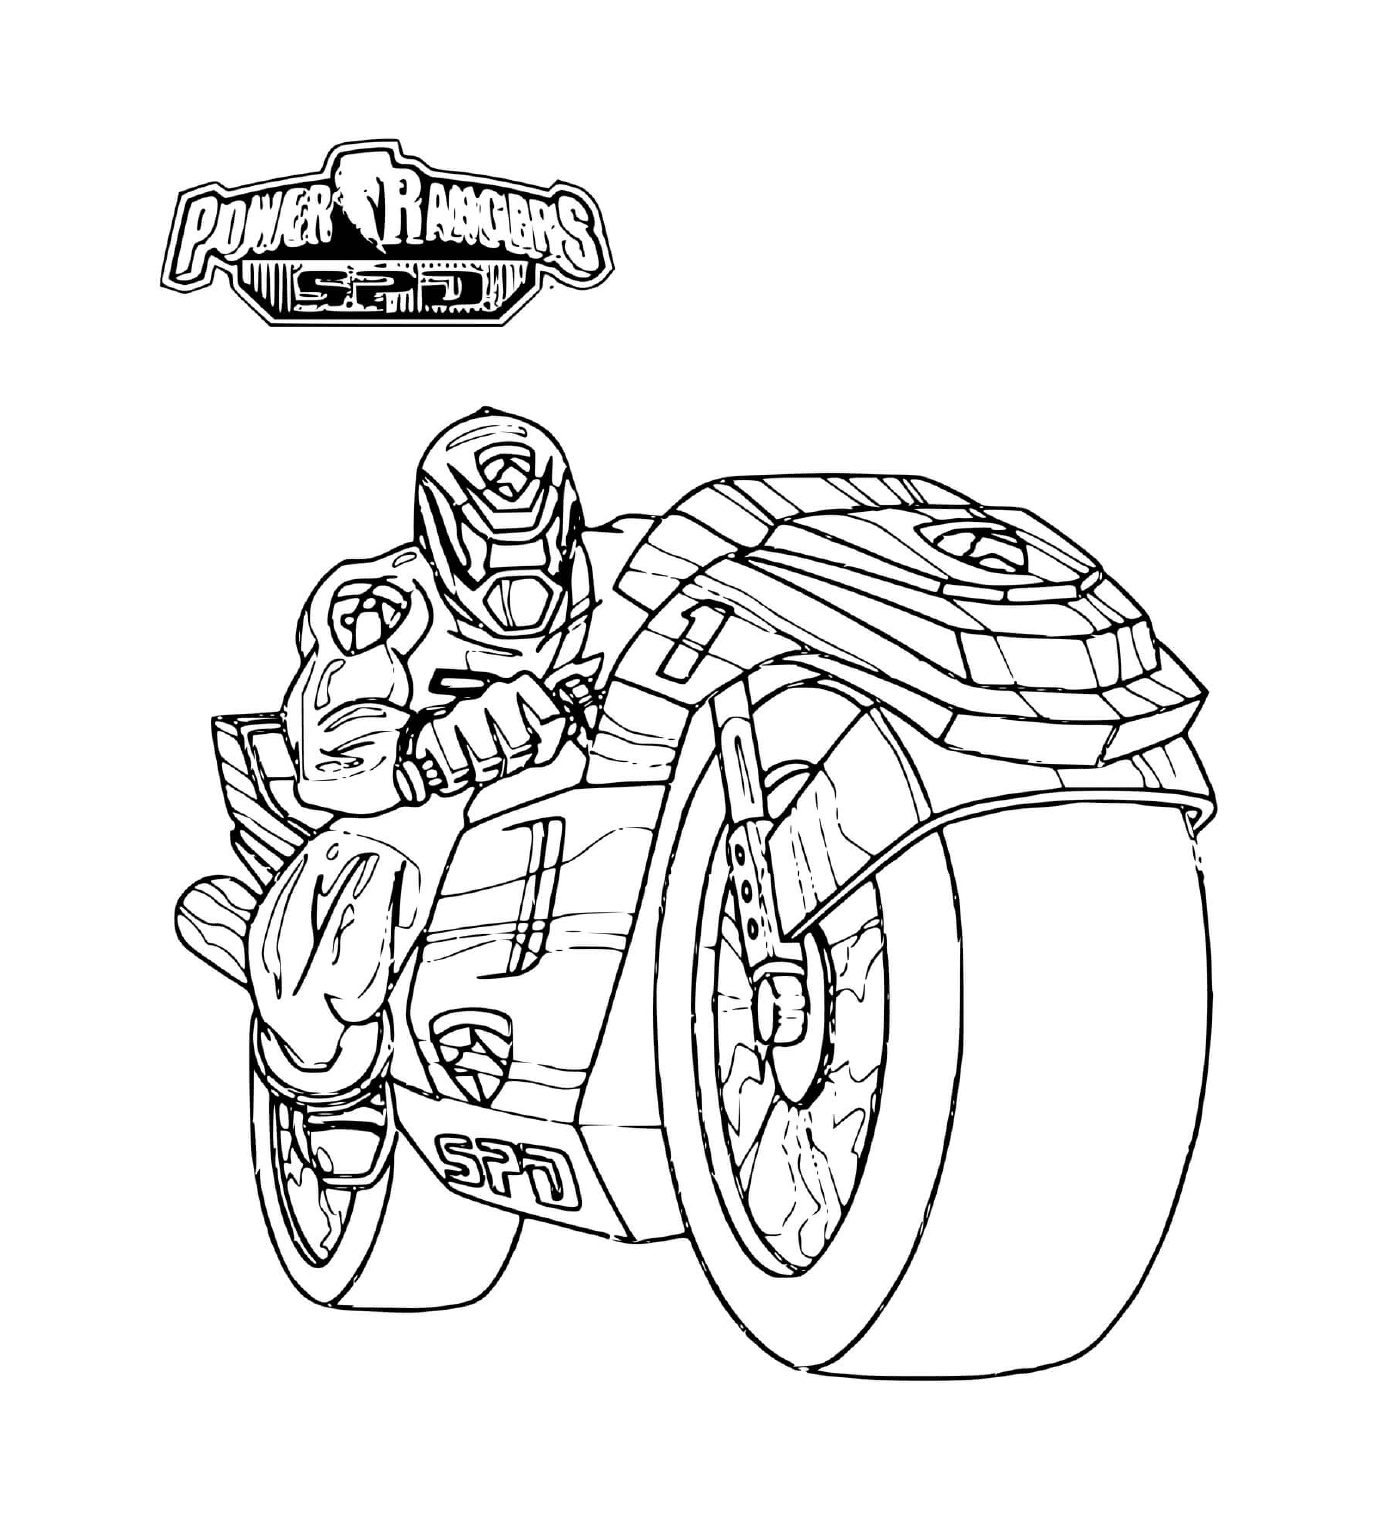   Power Ranger chevauchant une moto 